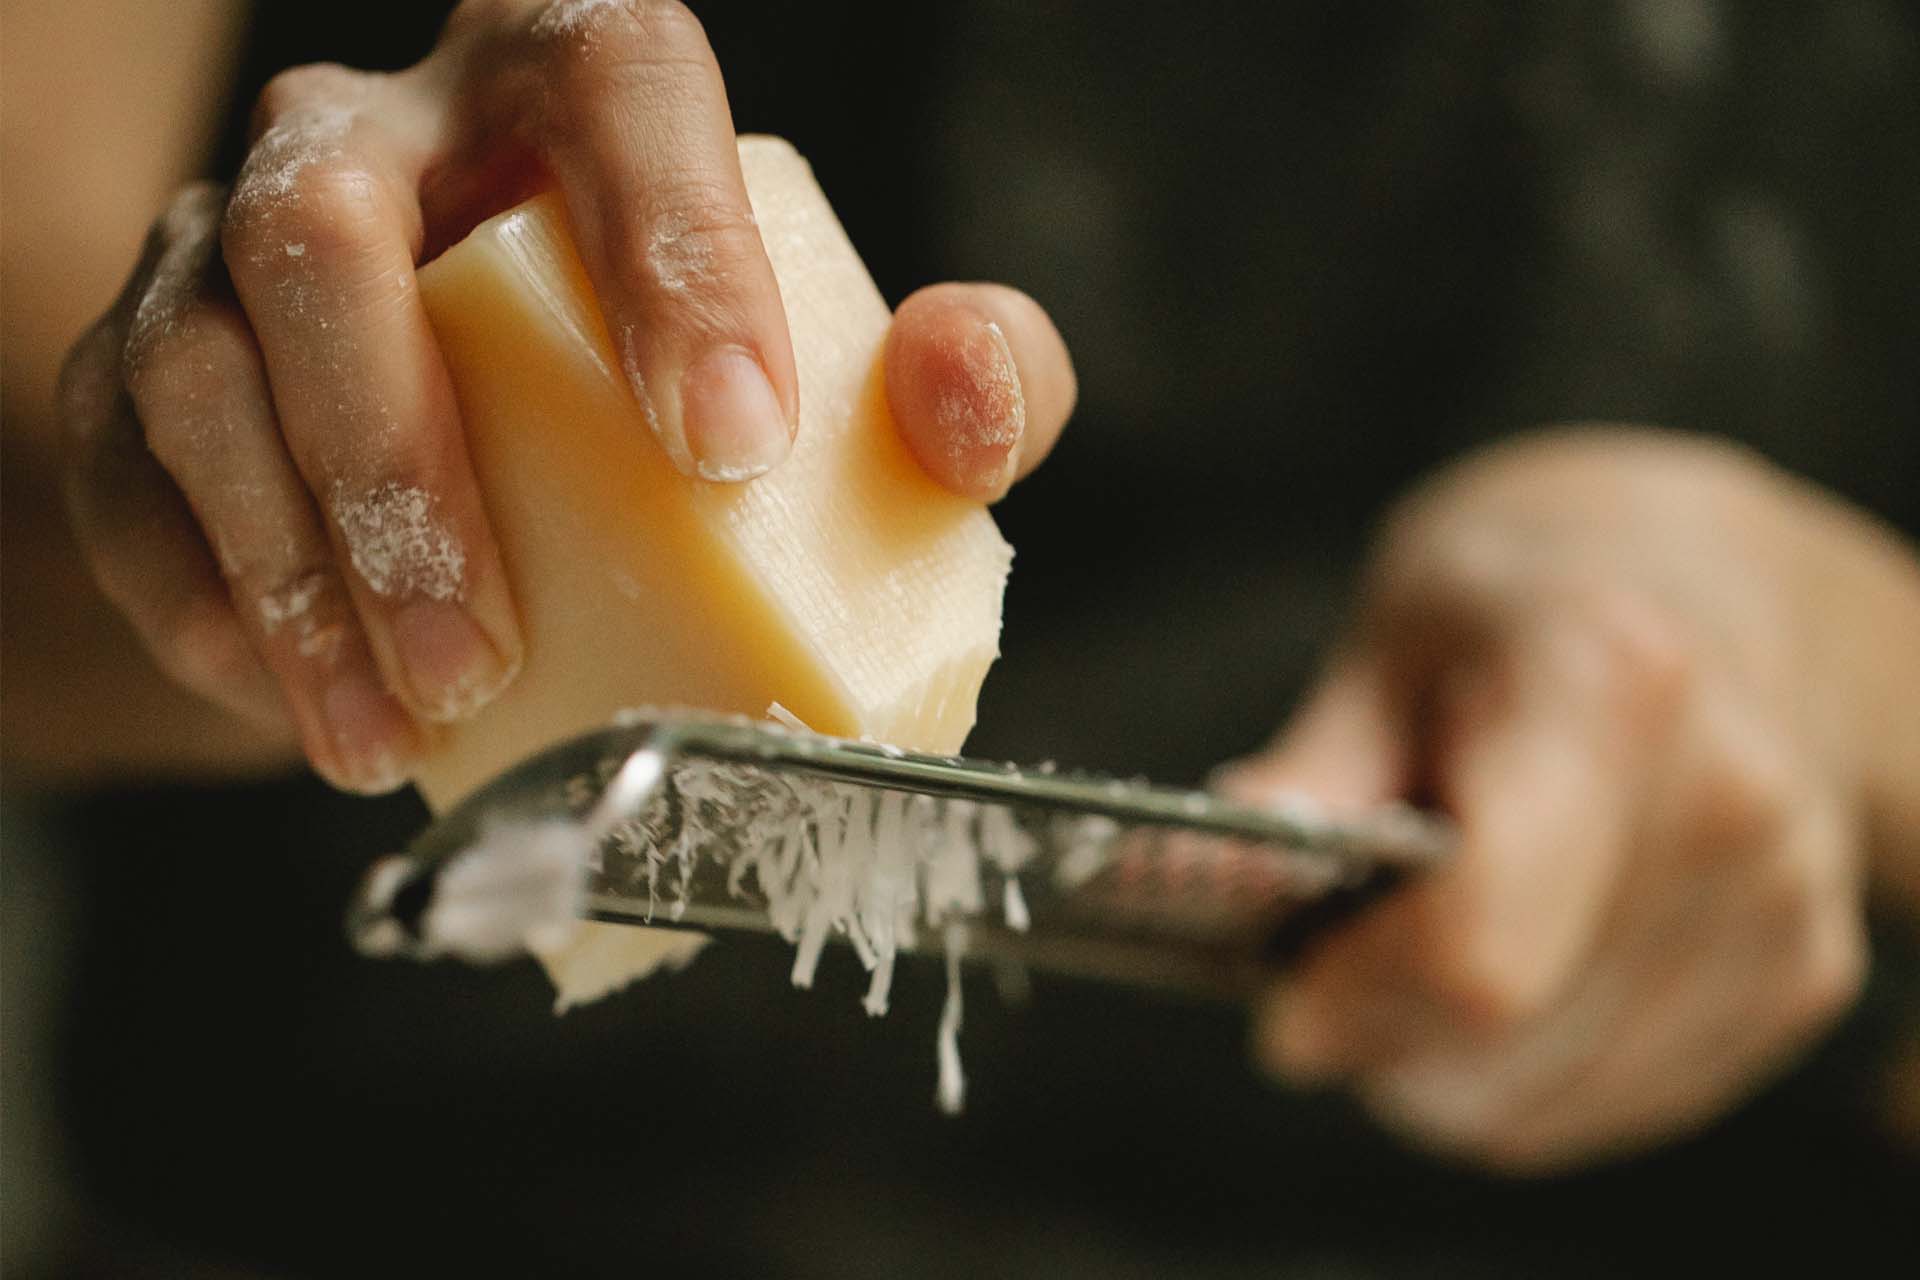 microplane grater grating parmesan cheese.